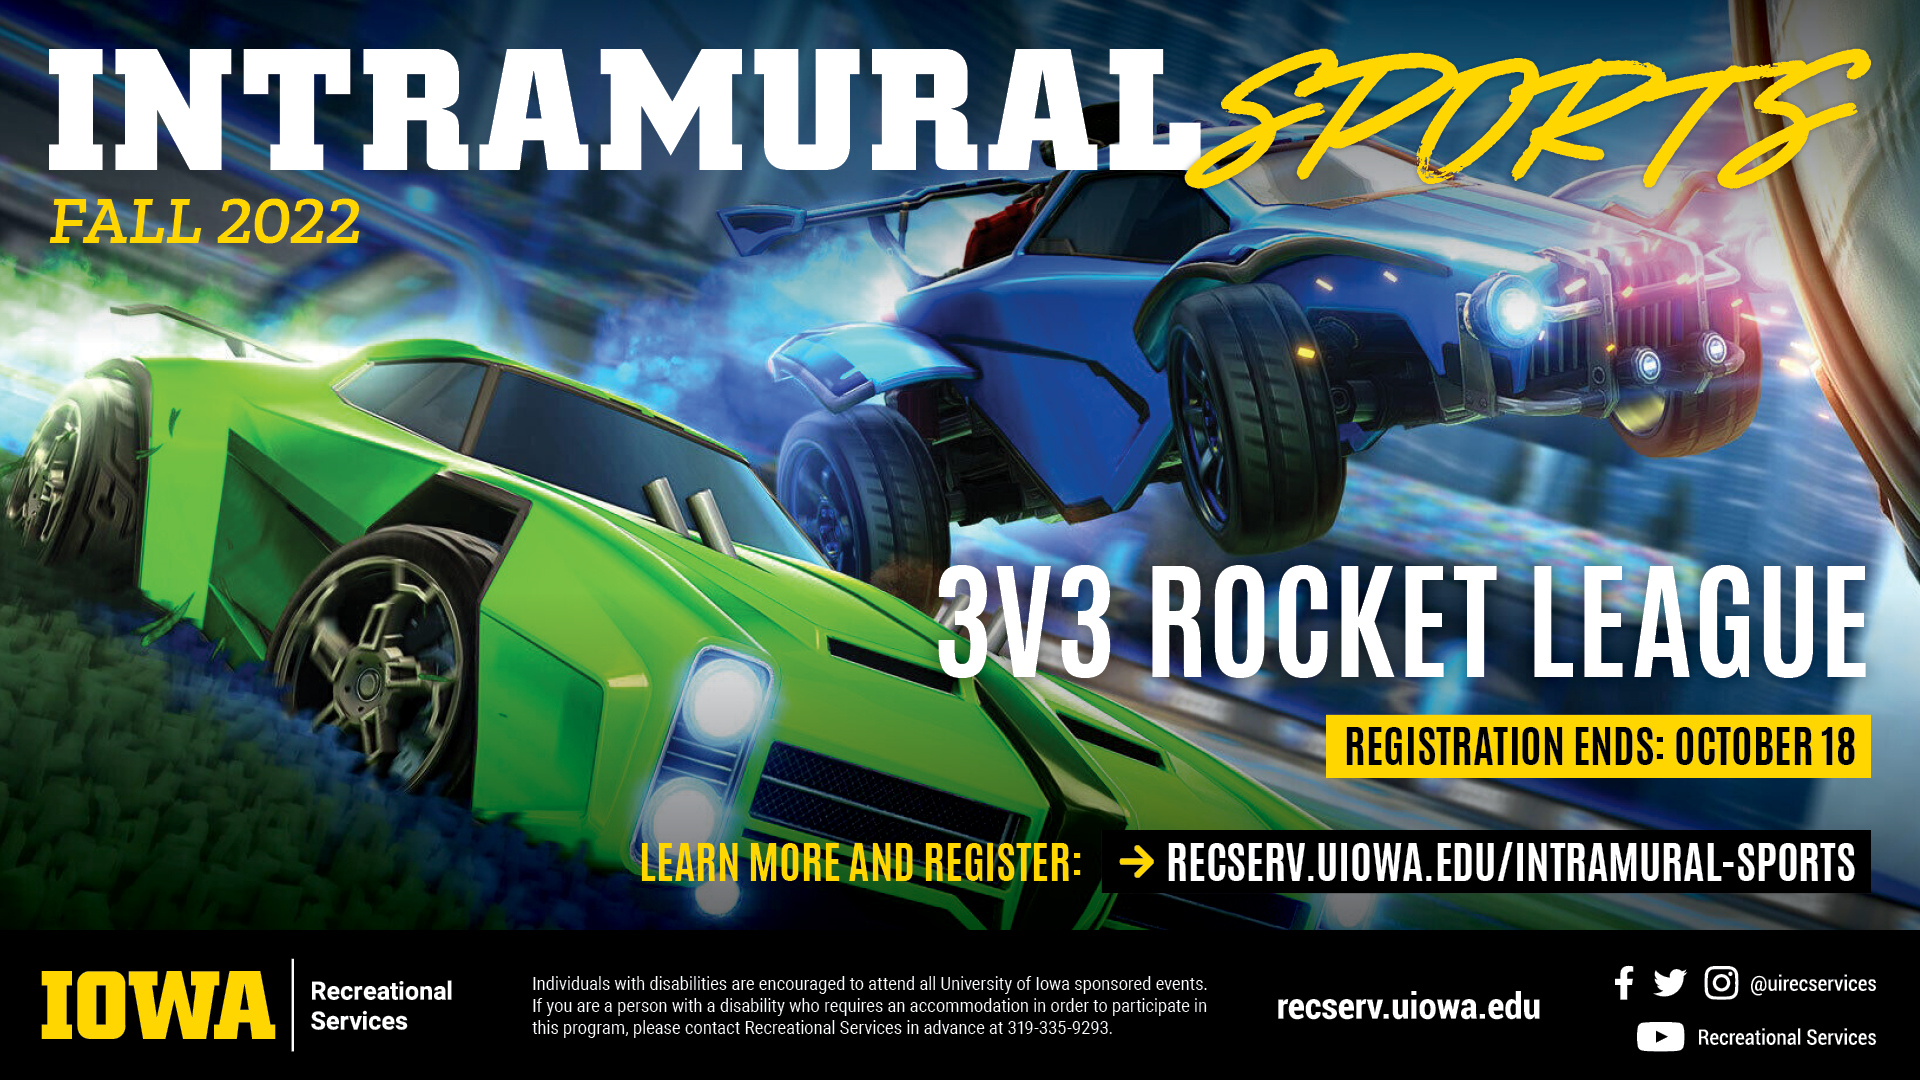 Intramural Sports Fall 2022: 3v3 Rocket League. Learn more and register at reserv.uiowa.edu/intramural-sports